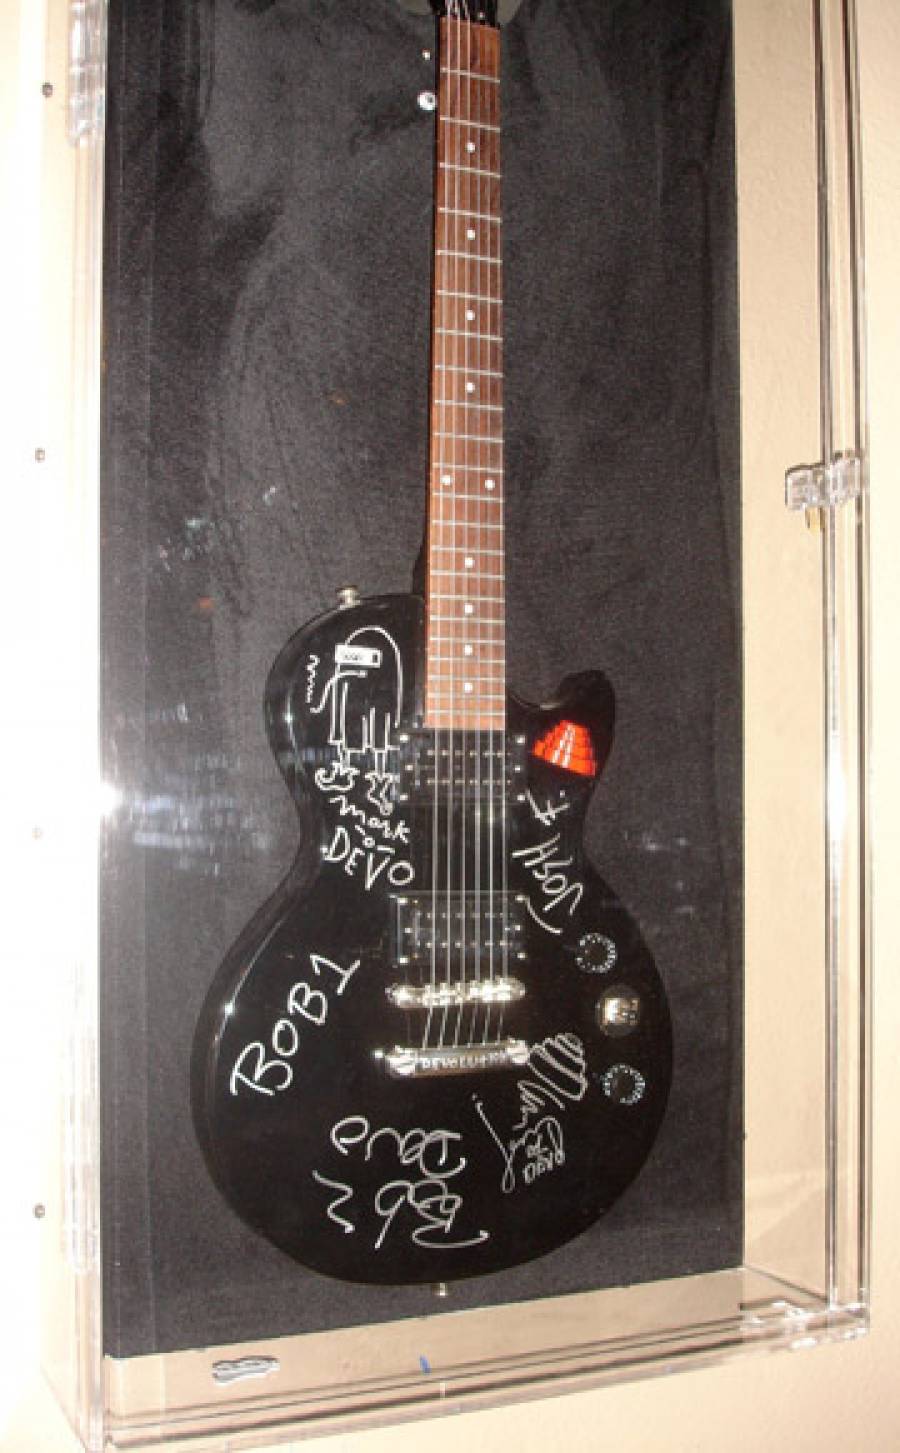 11/3/09: Guitar Signed by DEVO